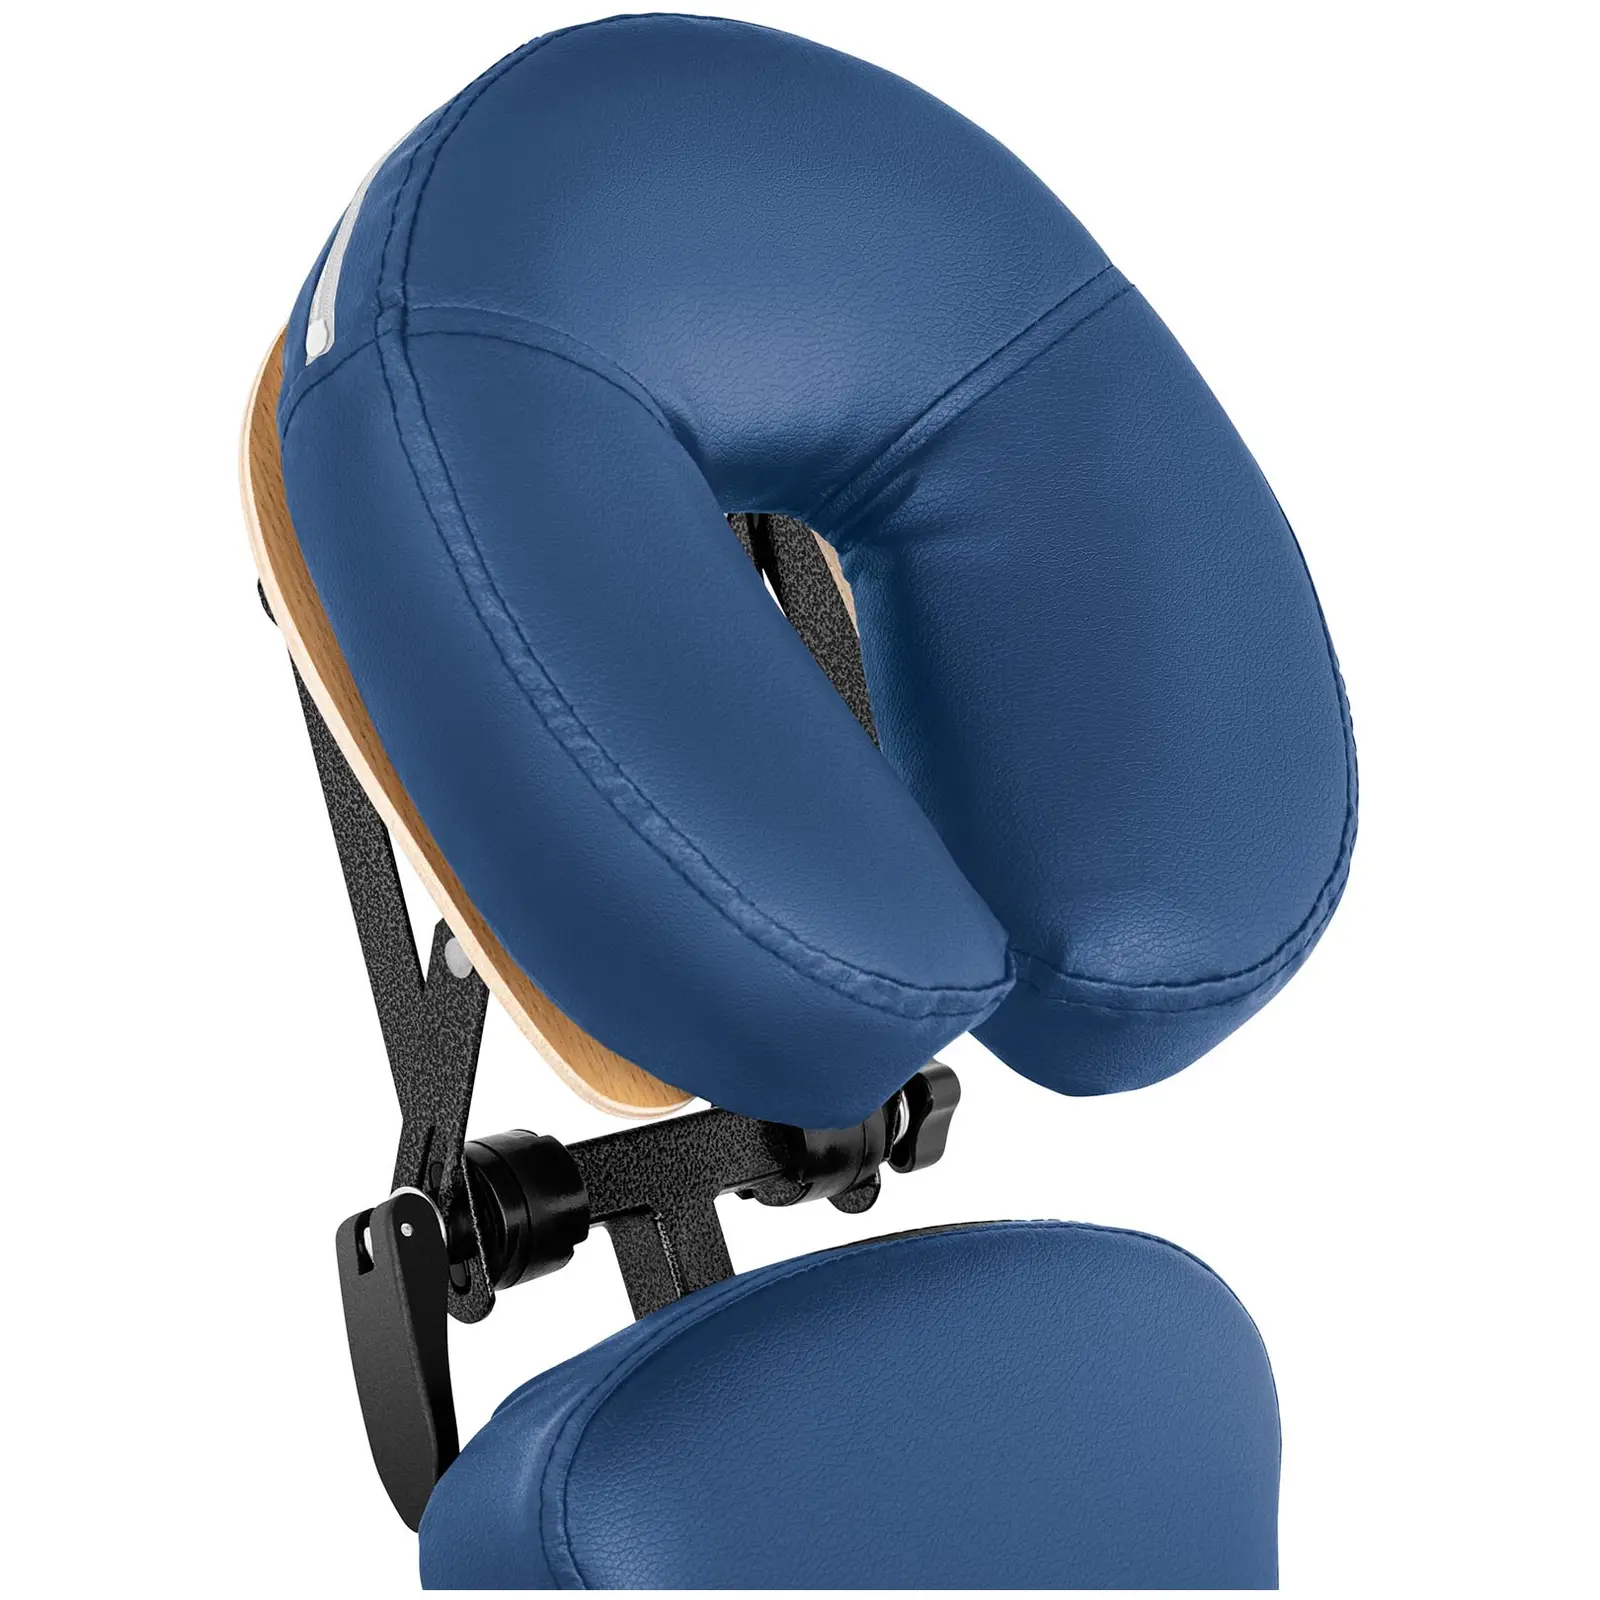 Folding Massage Chair - - 130 kg - Blue